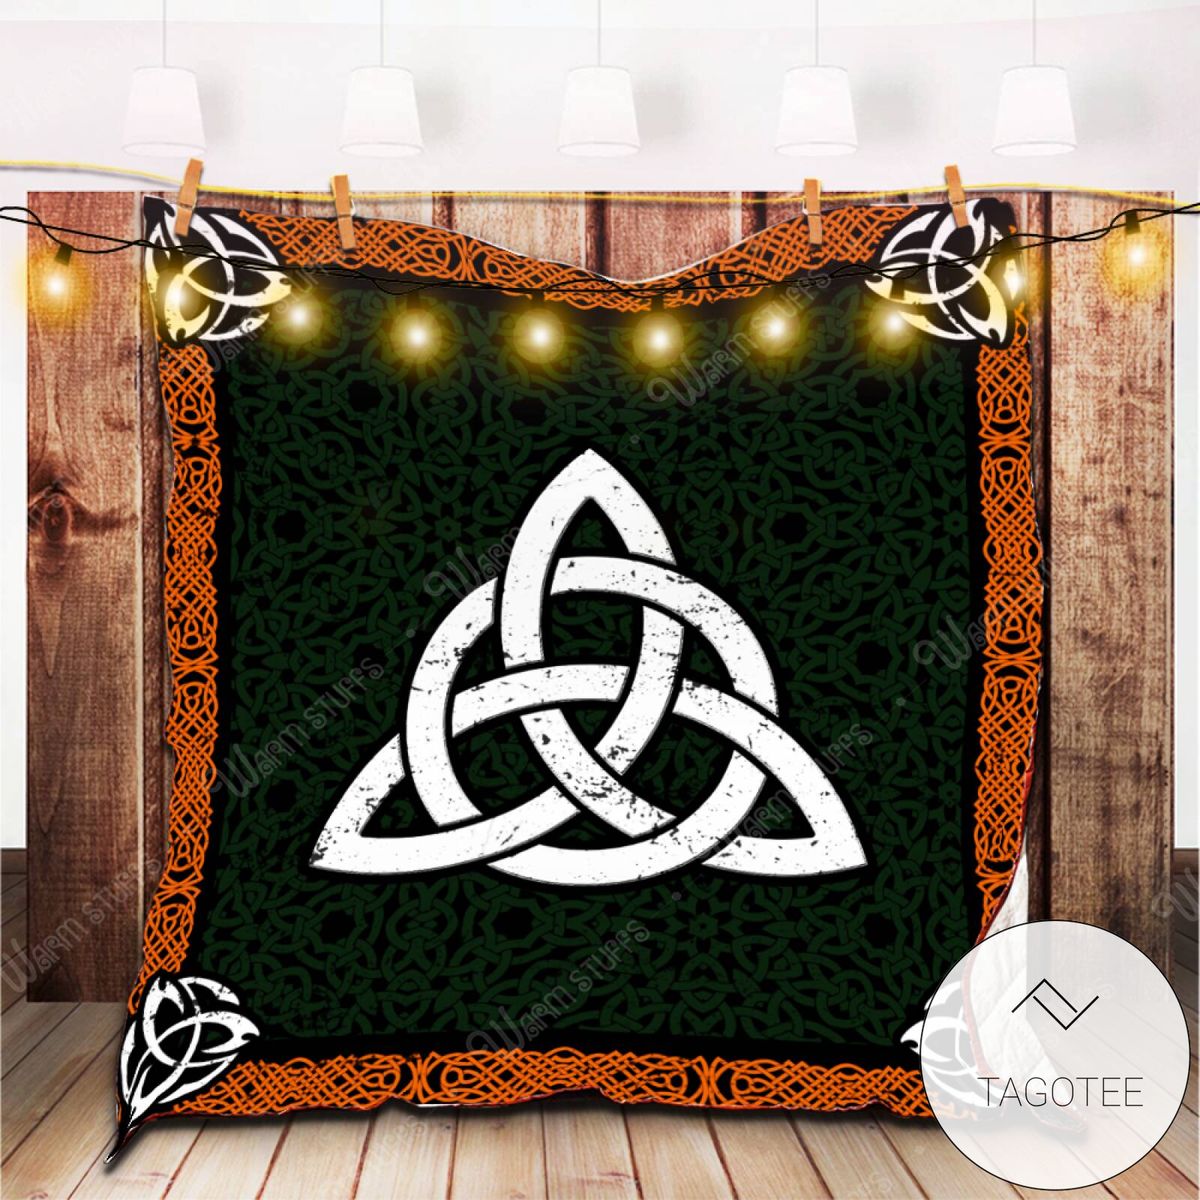 Celtic Trinity Knot Quilt Blanket